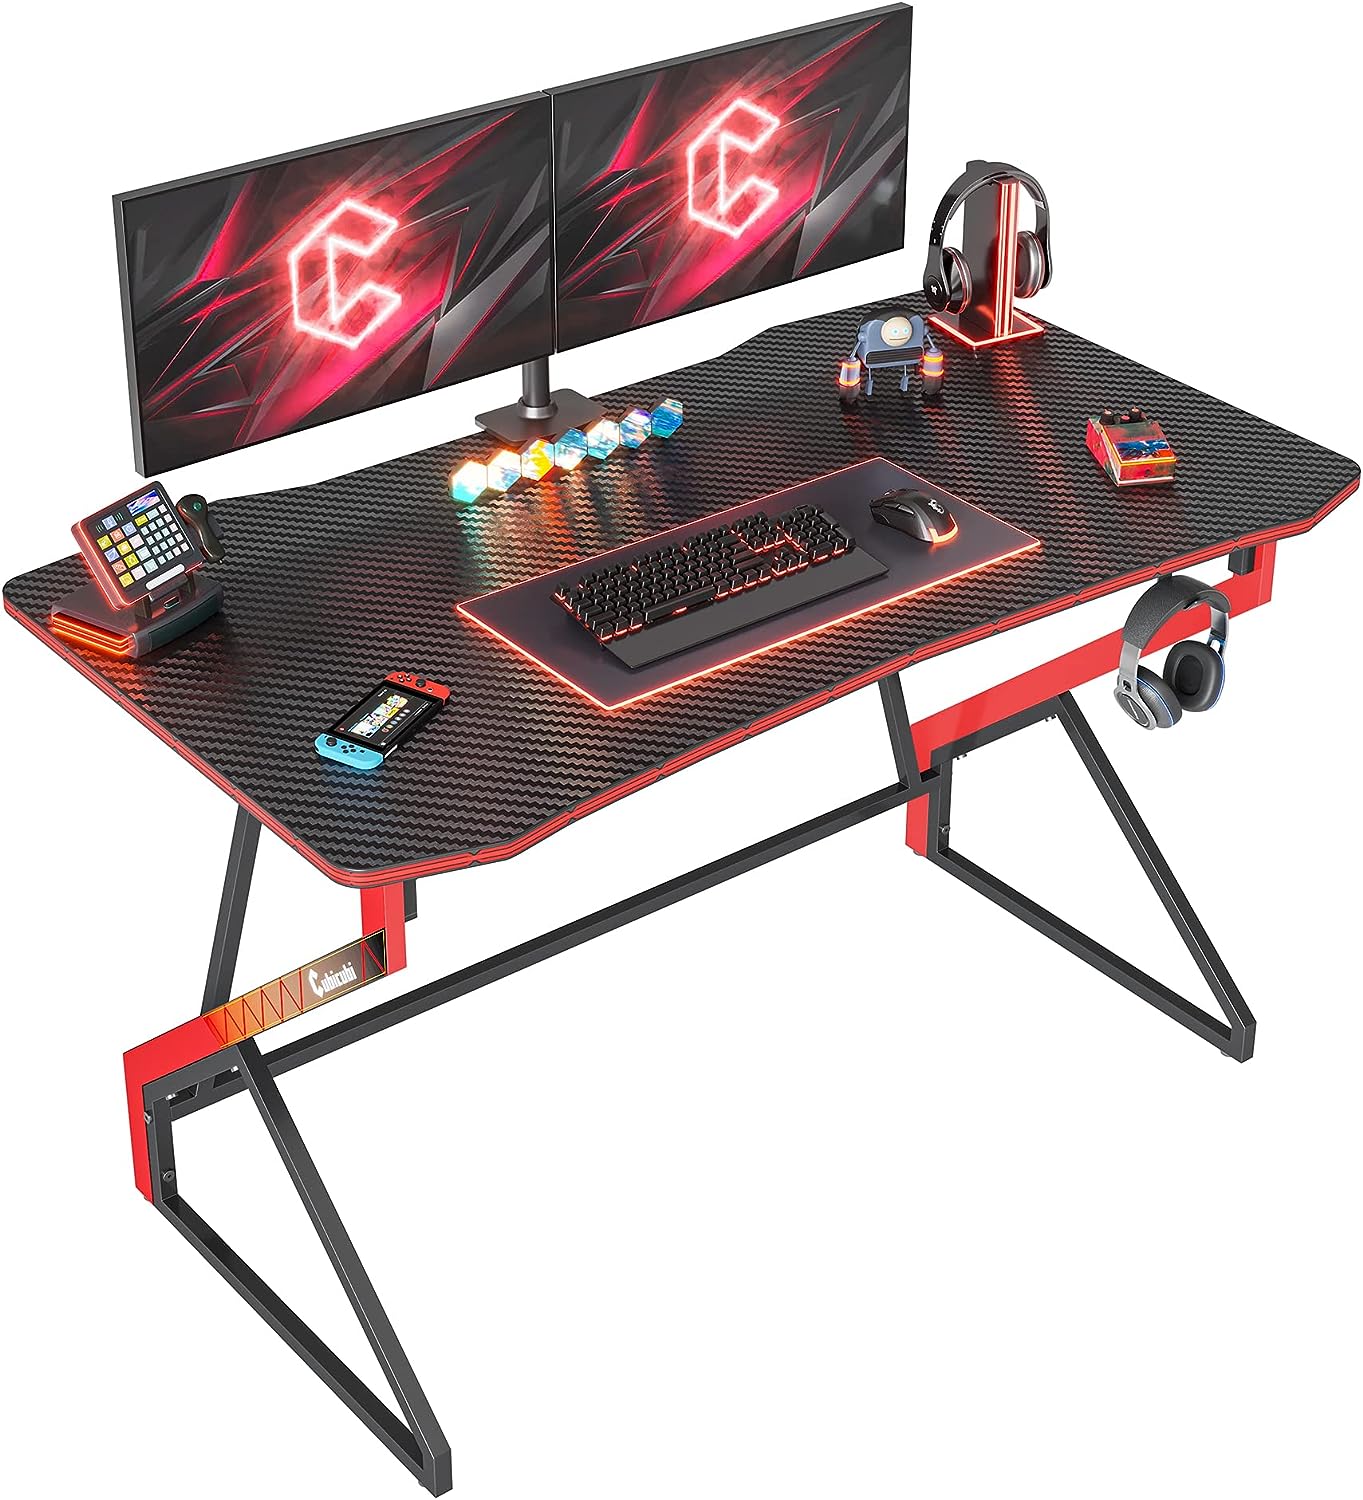 CubiCubi Gaming Desk Z Shaped 47 inch - Carbon Fiber Surface with Headphone Hook